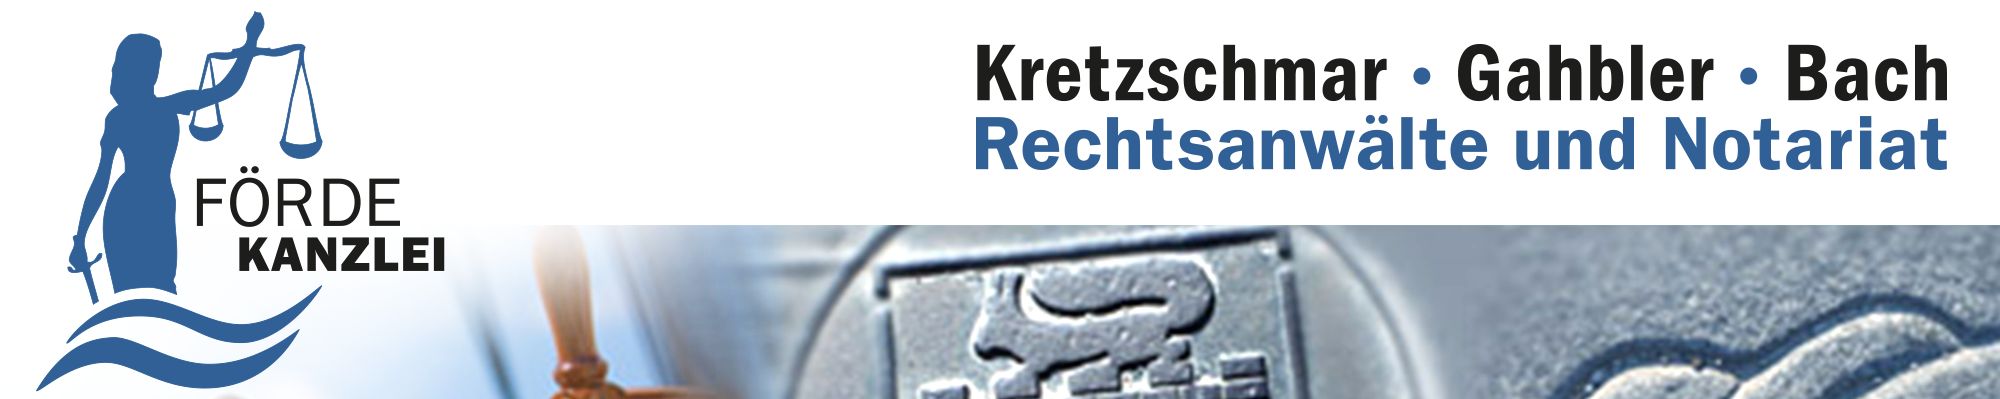 Fördekanzlei RAe. und Notariat Kretzschmar Gahbler Bach